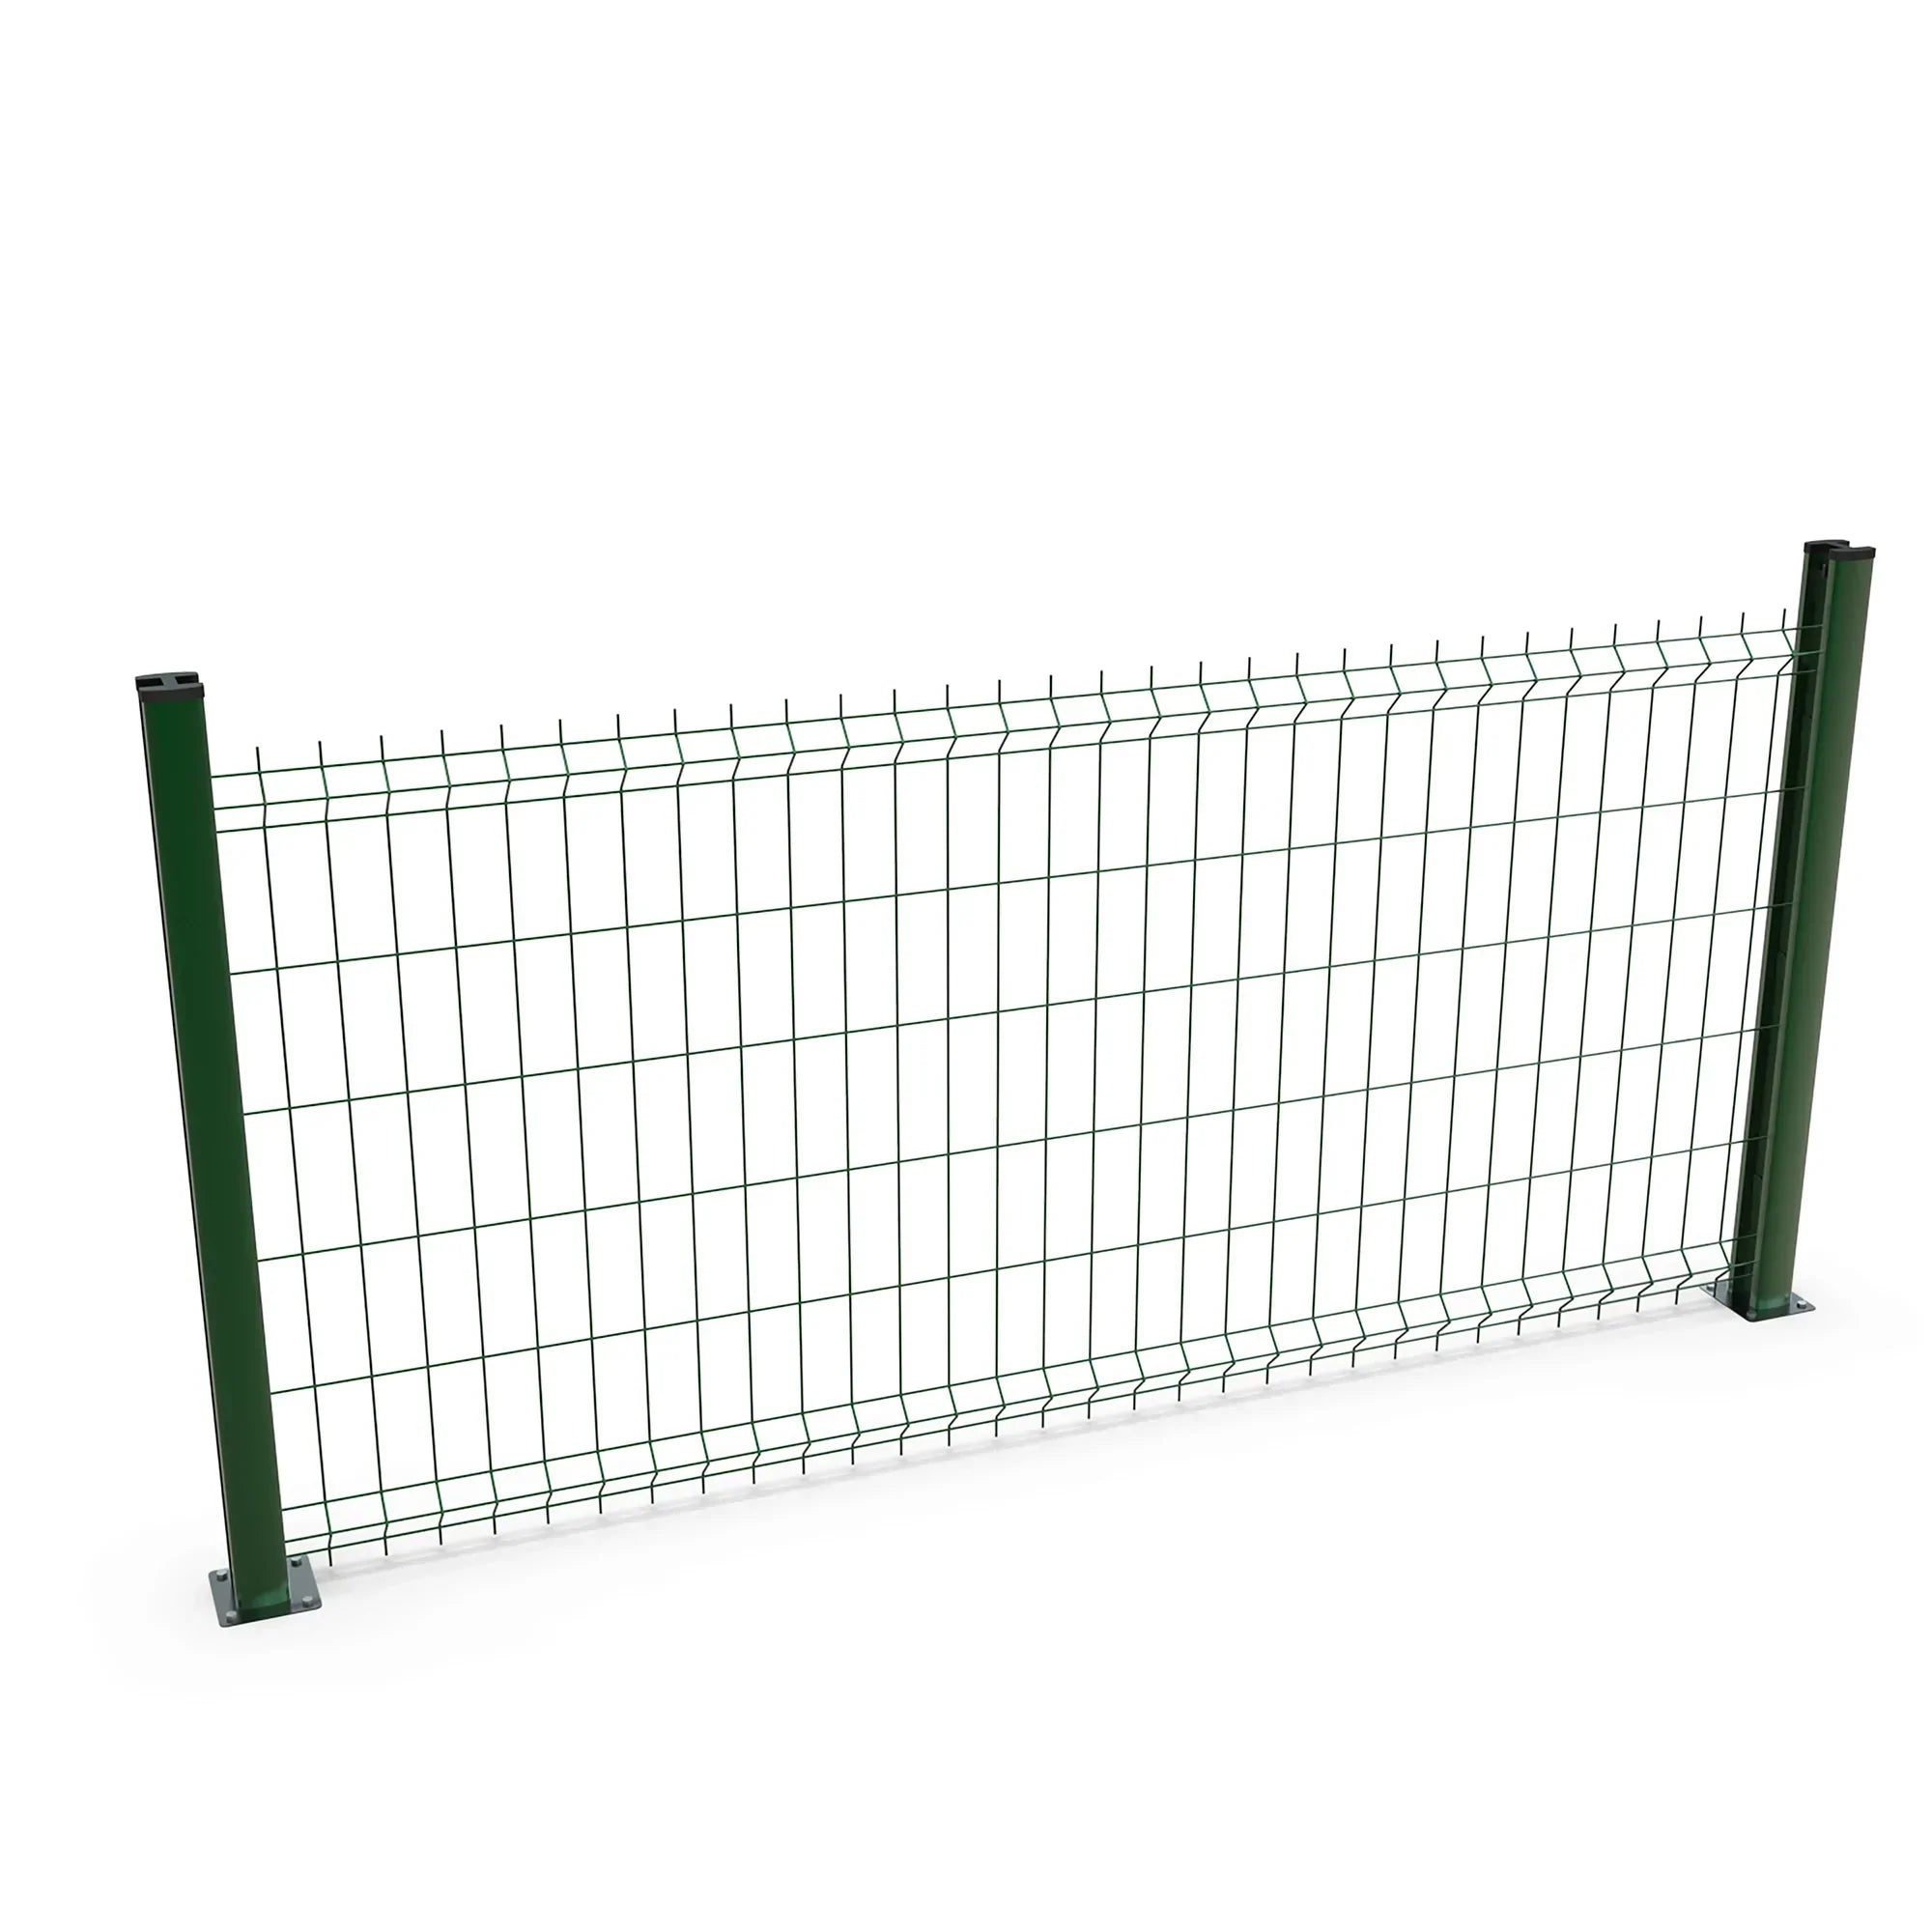 Déstockage clôture - Destockage grillage et clôture rigide